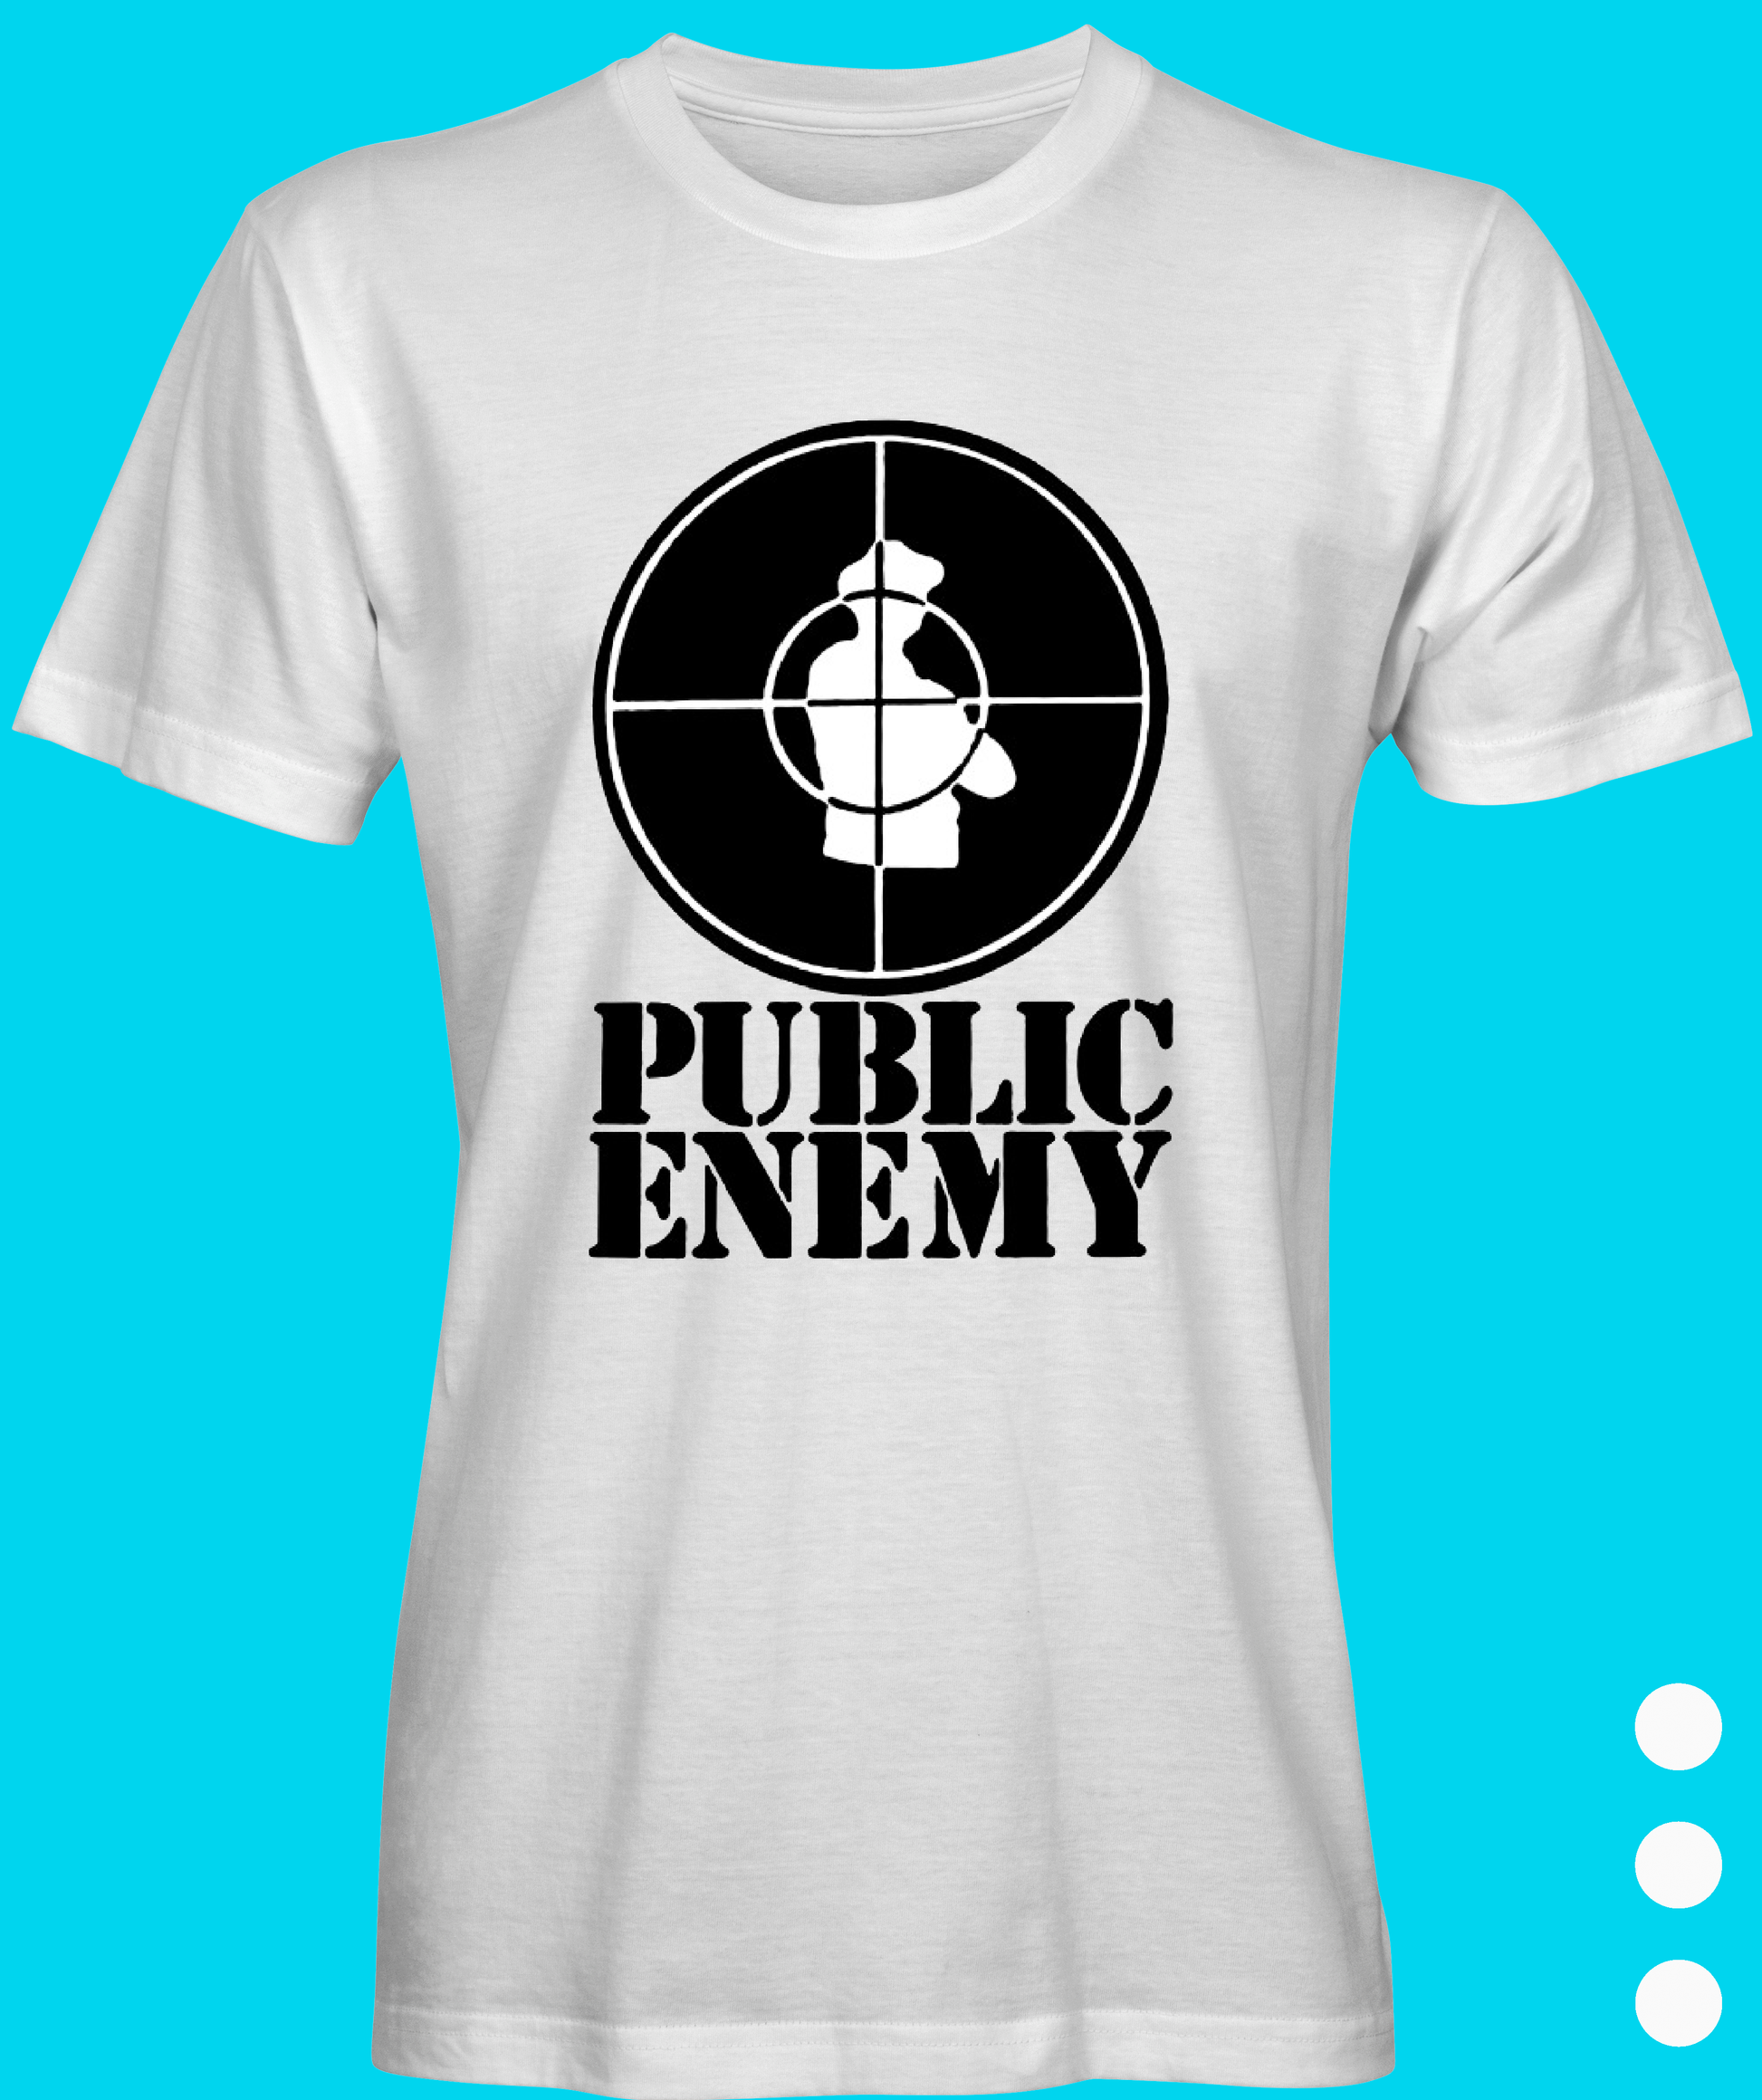 Public Enemy Graphic T-shirts for Sale